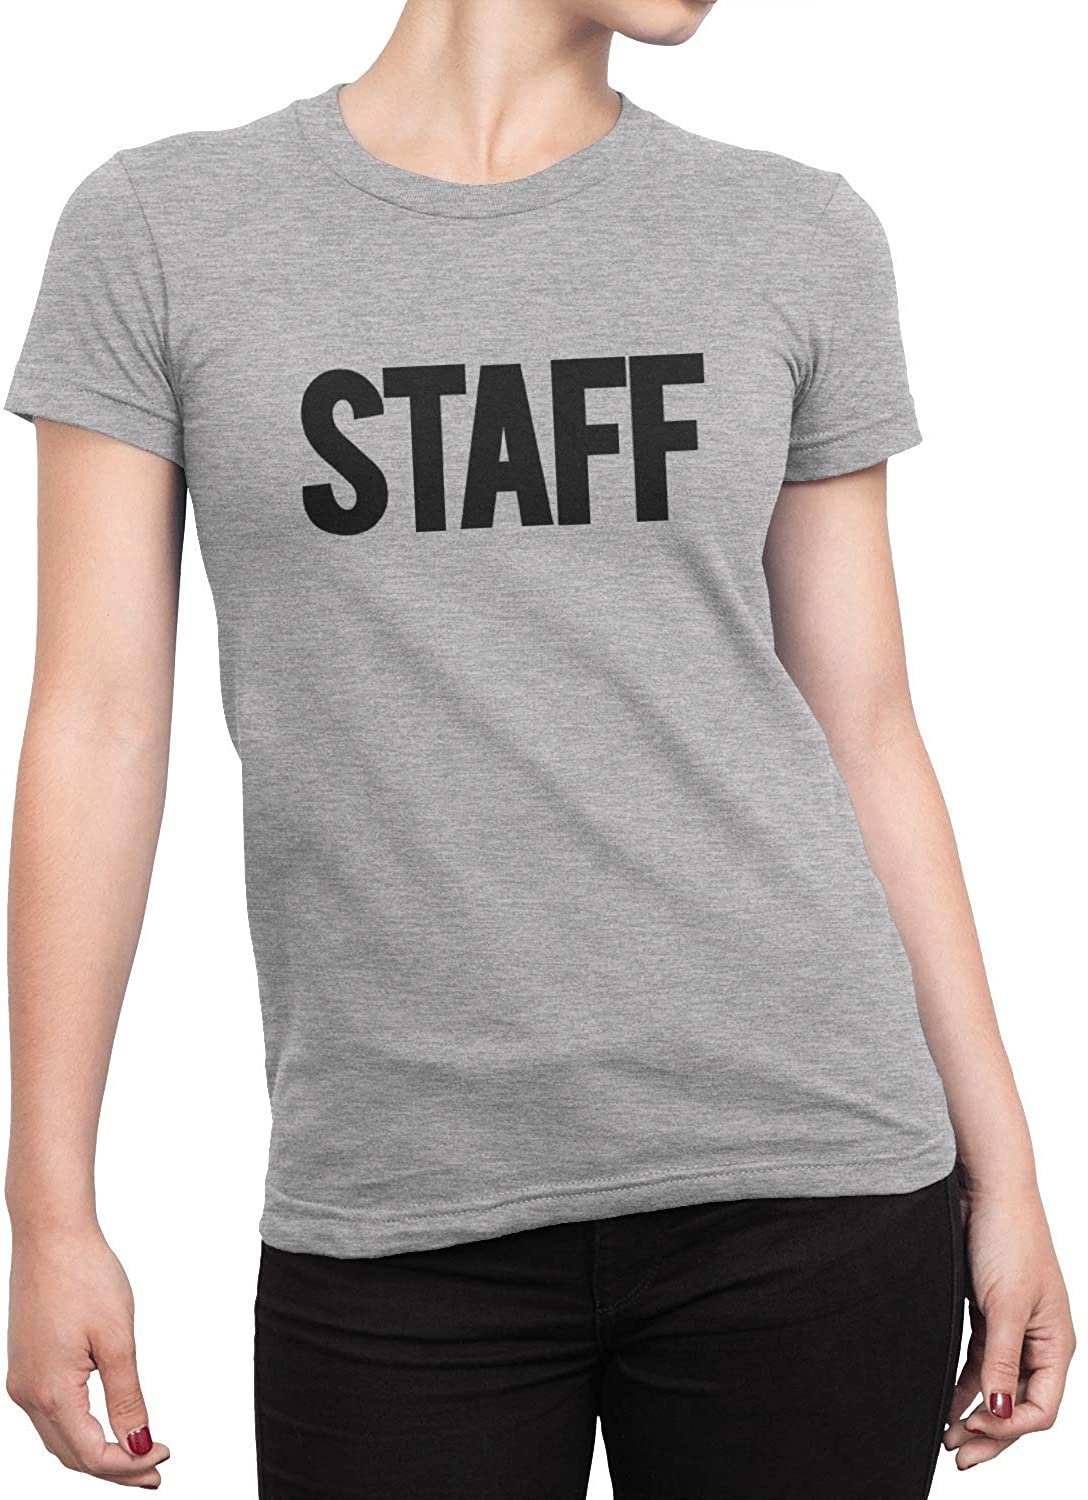 Staff Ladies Short Sleeve T-Shirt (Solid Design, Heather Gray)